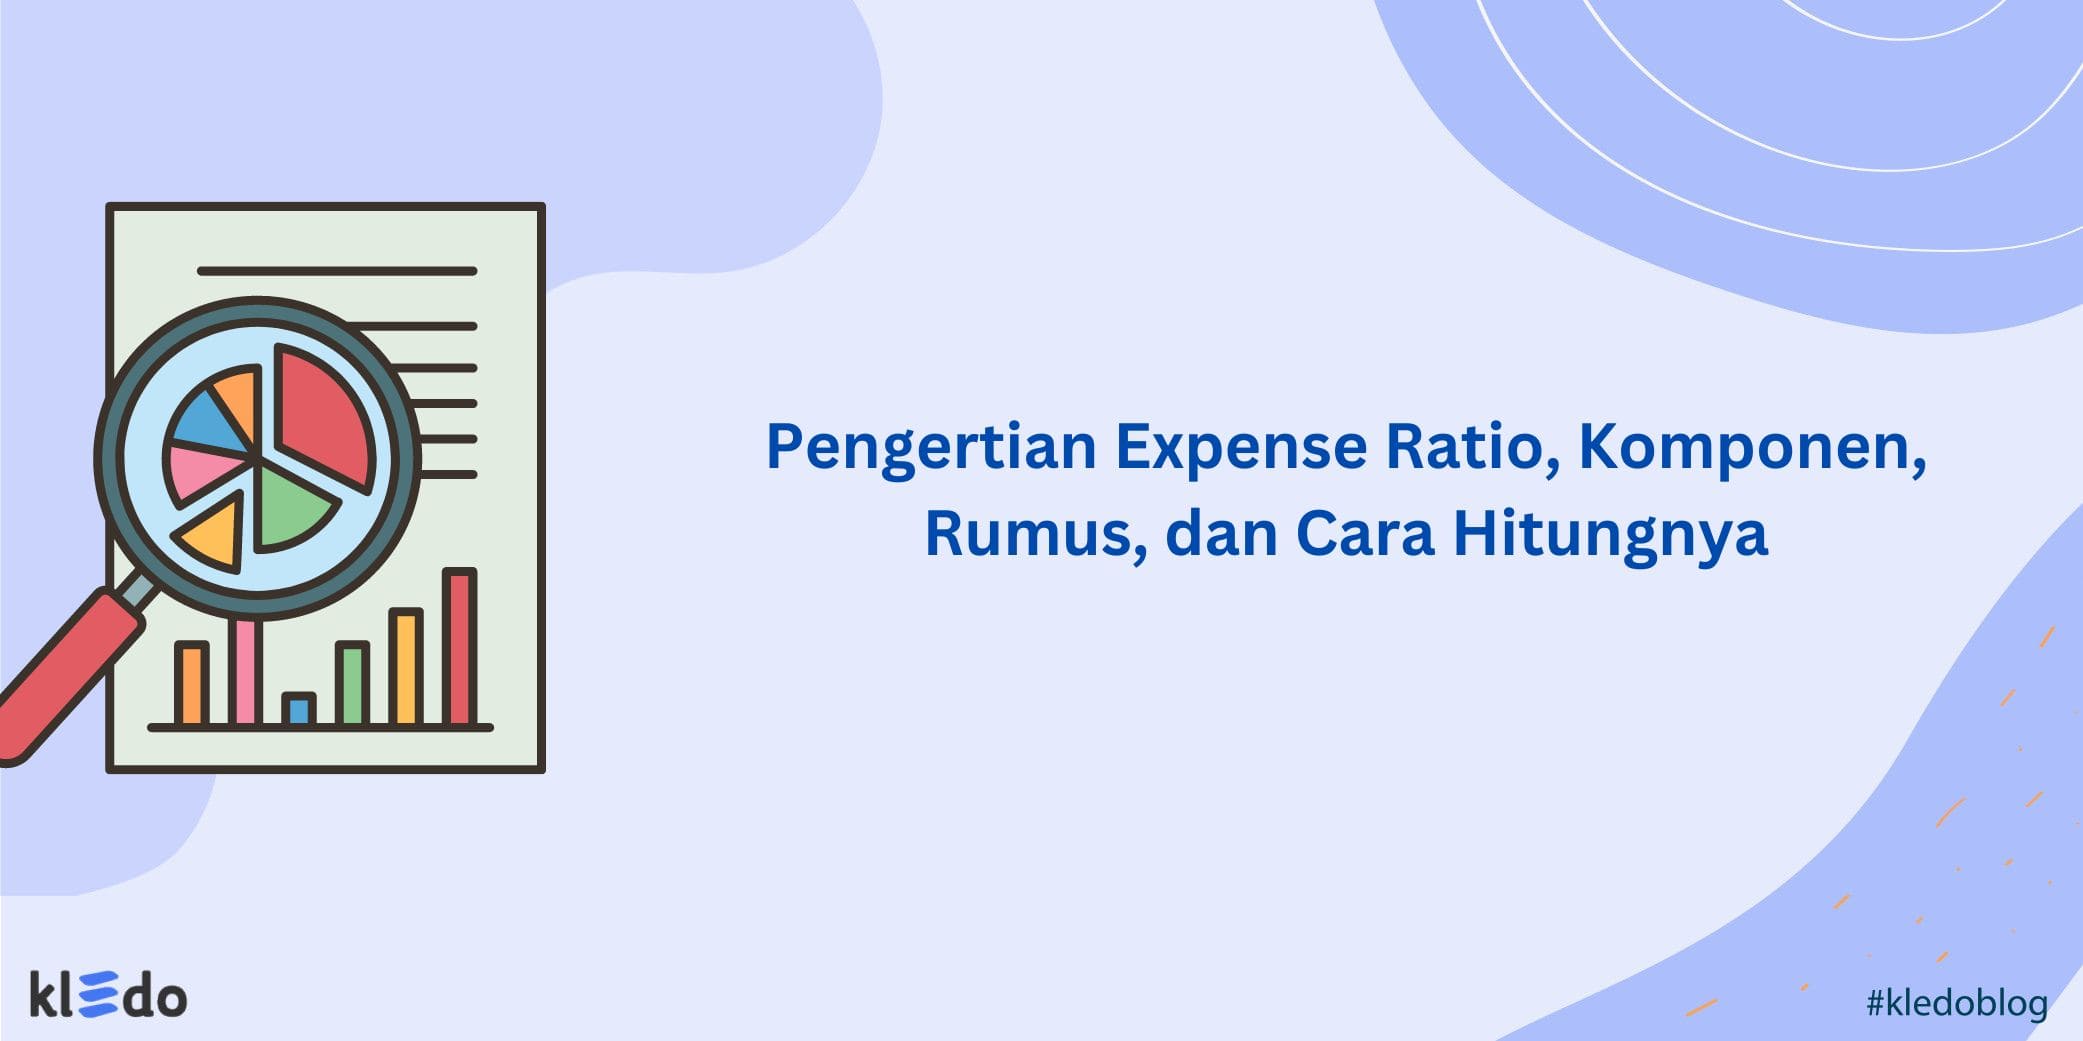 expense ratio banner